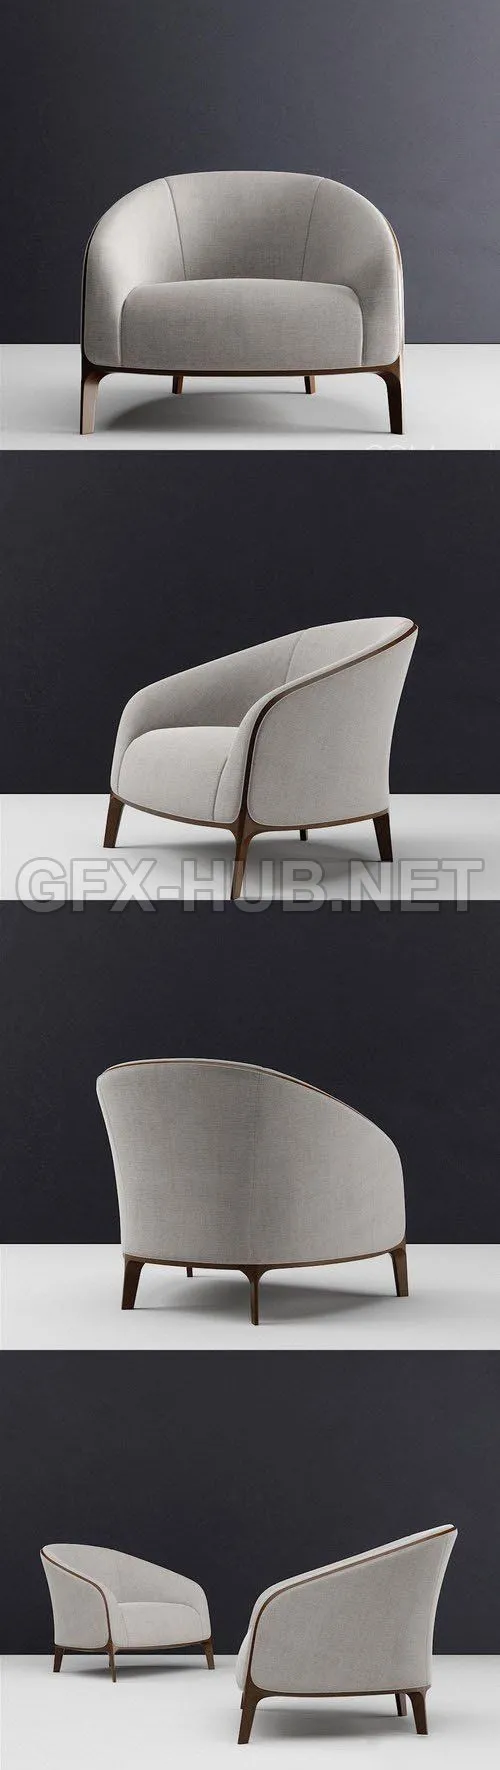 Catherine Lounge Chair By Bernhardt Design – 209747